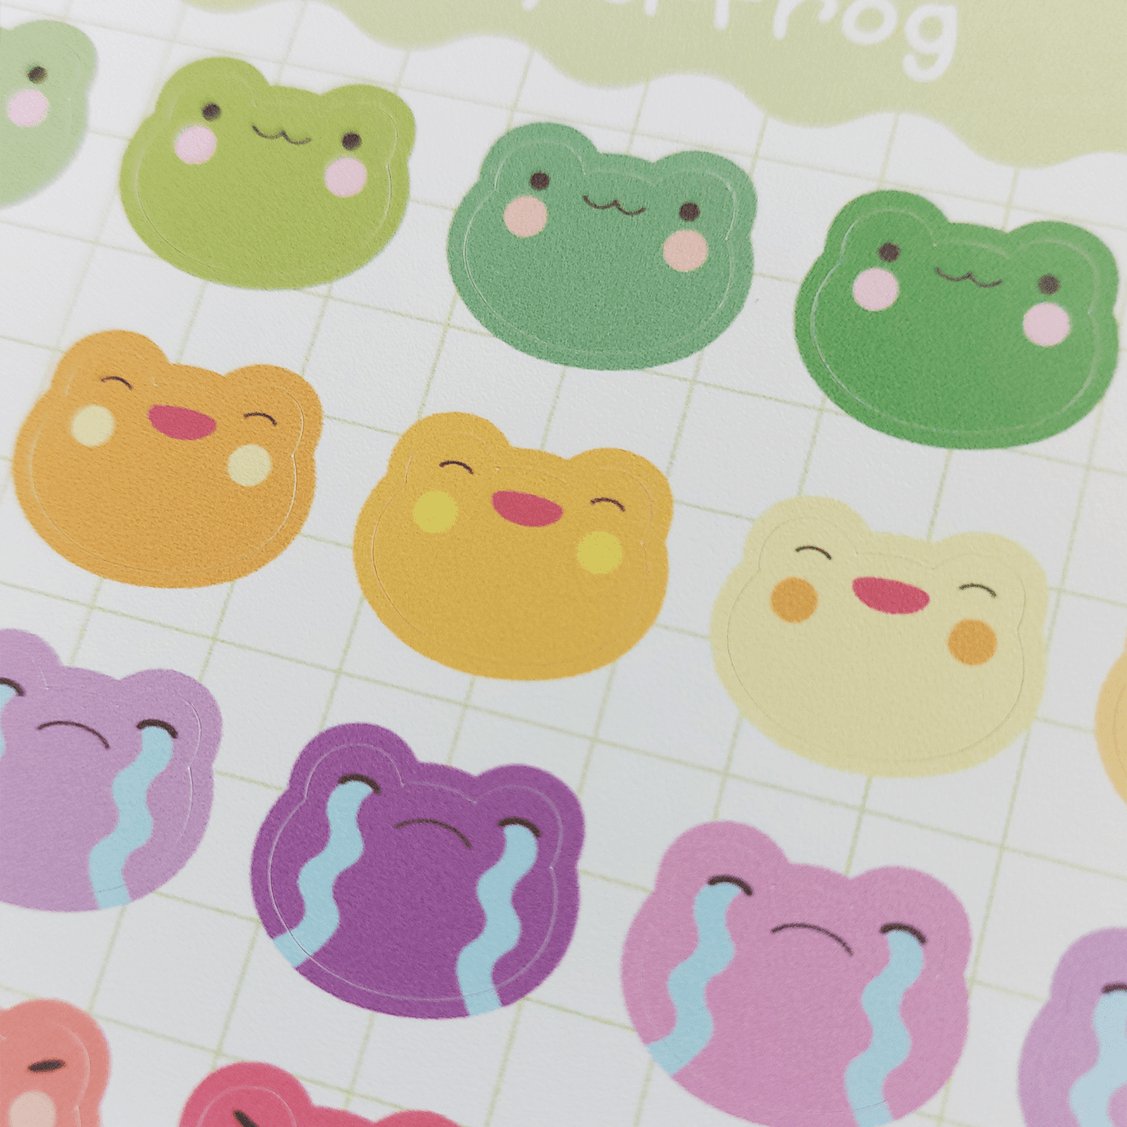 Cute Frog Sticker Sheet